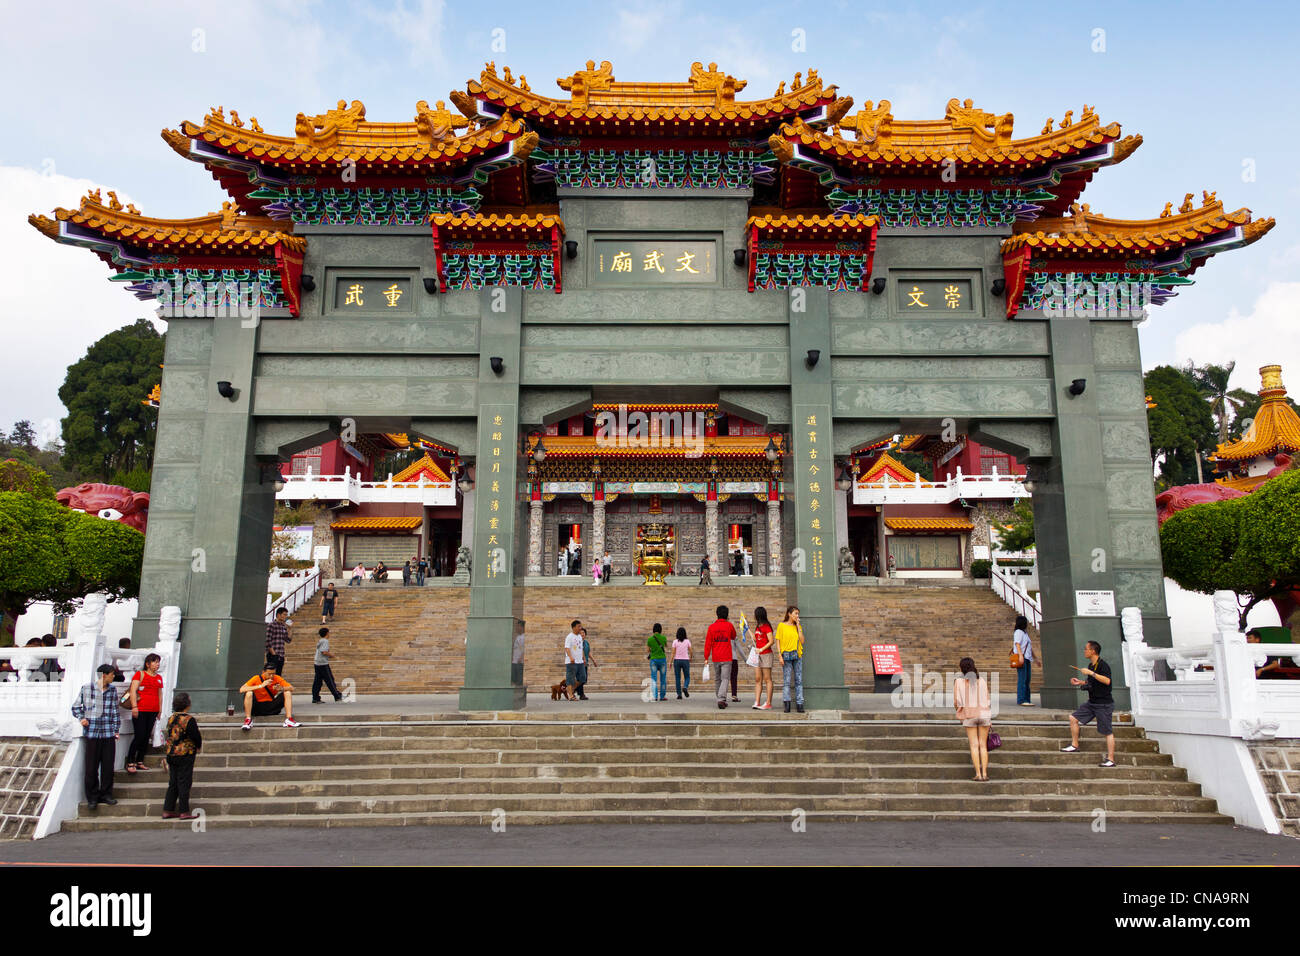 Entrance to Wenwu Temple, Sun Moon Lake, Taiwan. JMH5843 Stock Photo